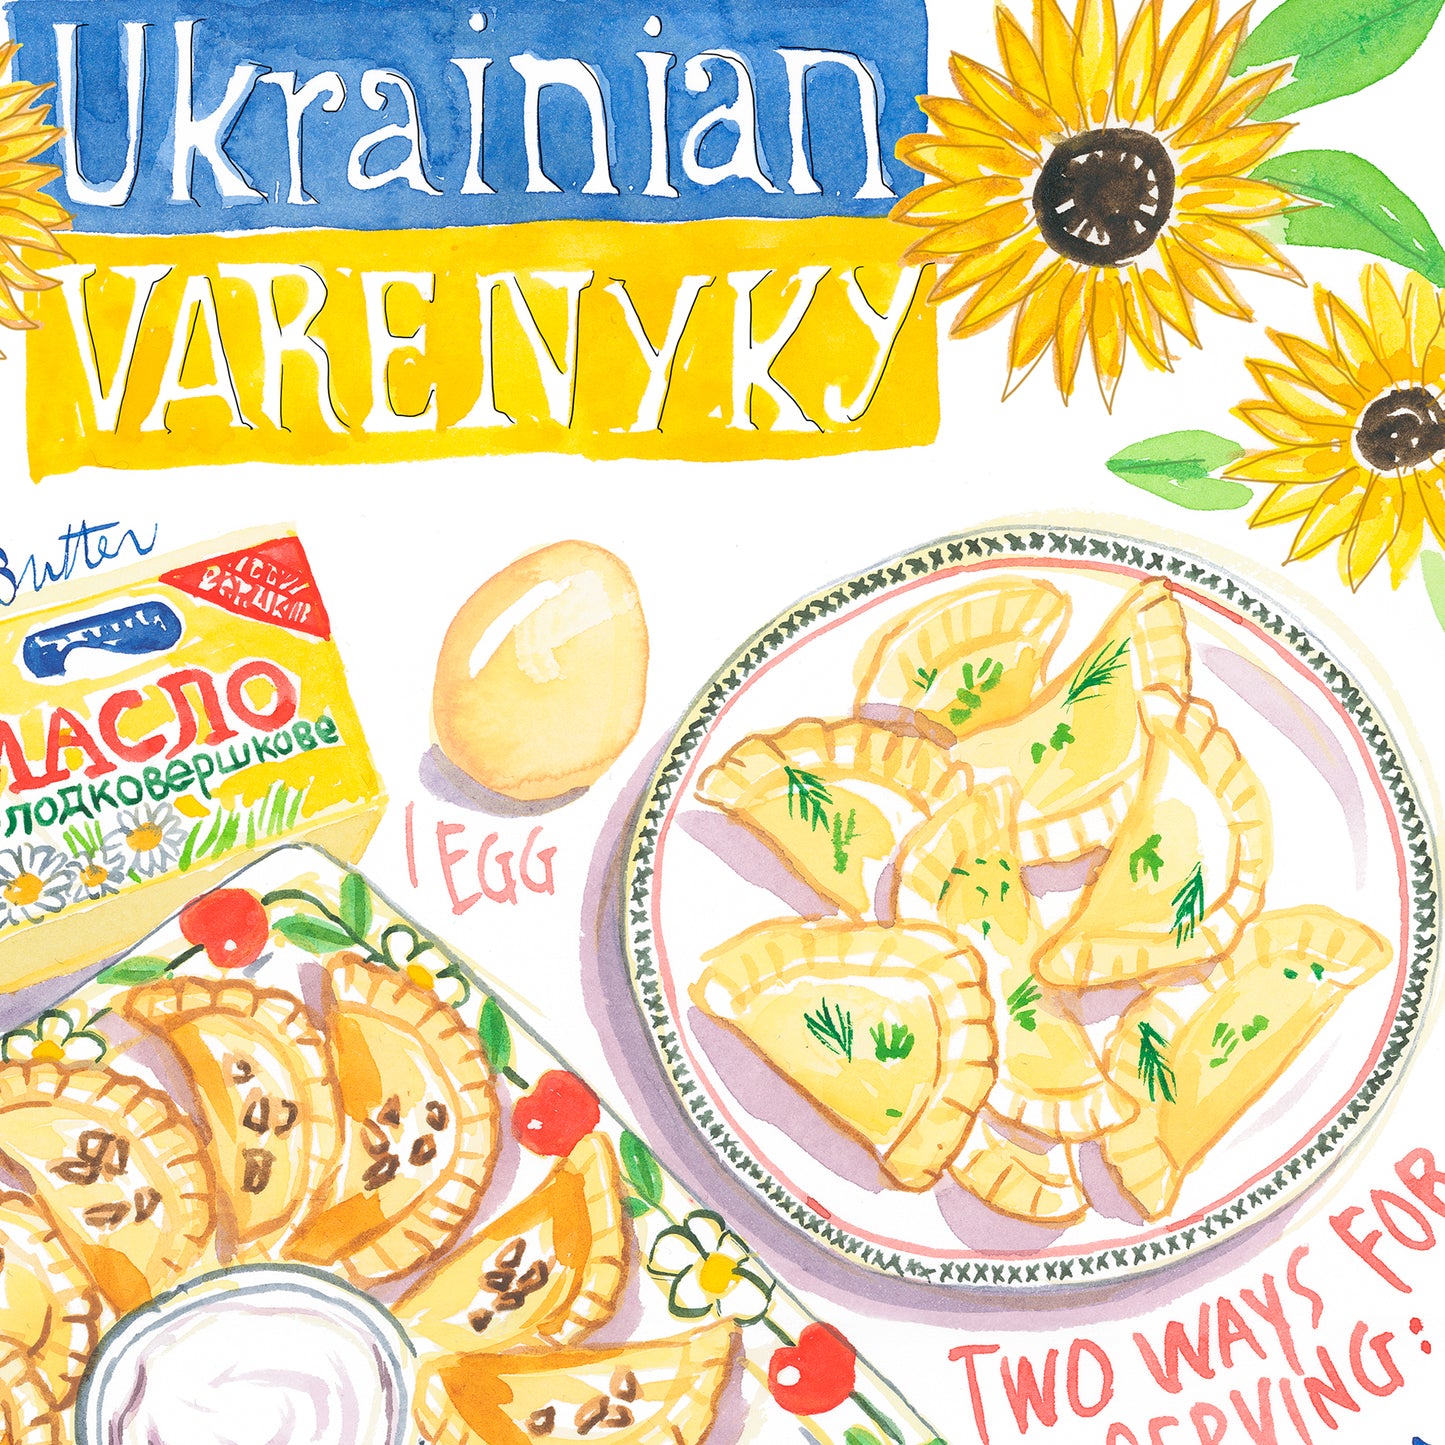 Ukrainian Dumpling recipe - Varenyky